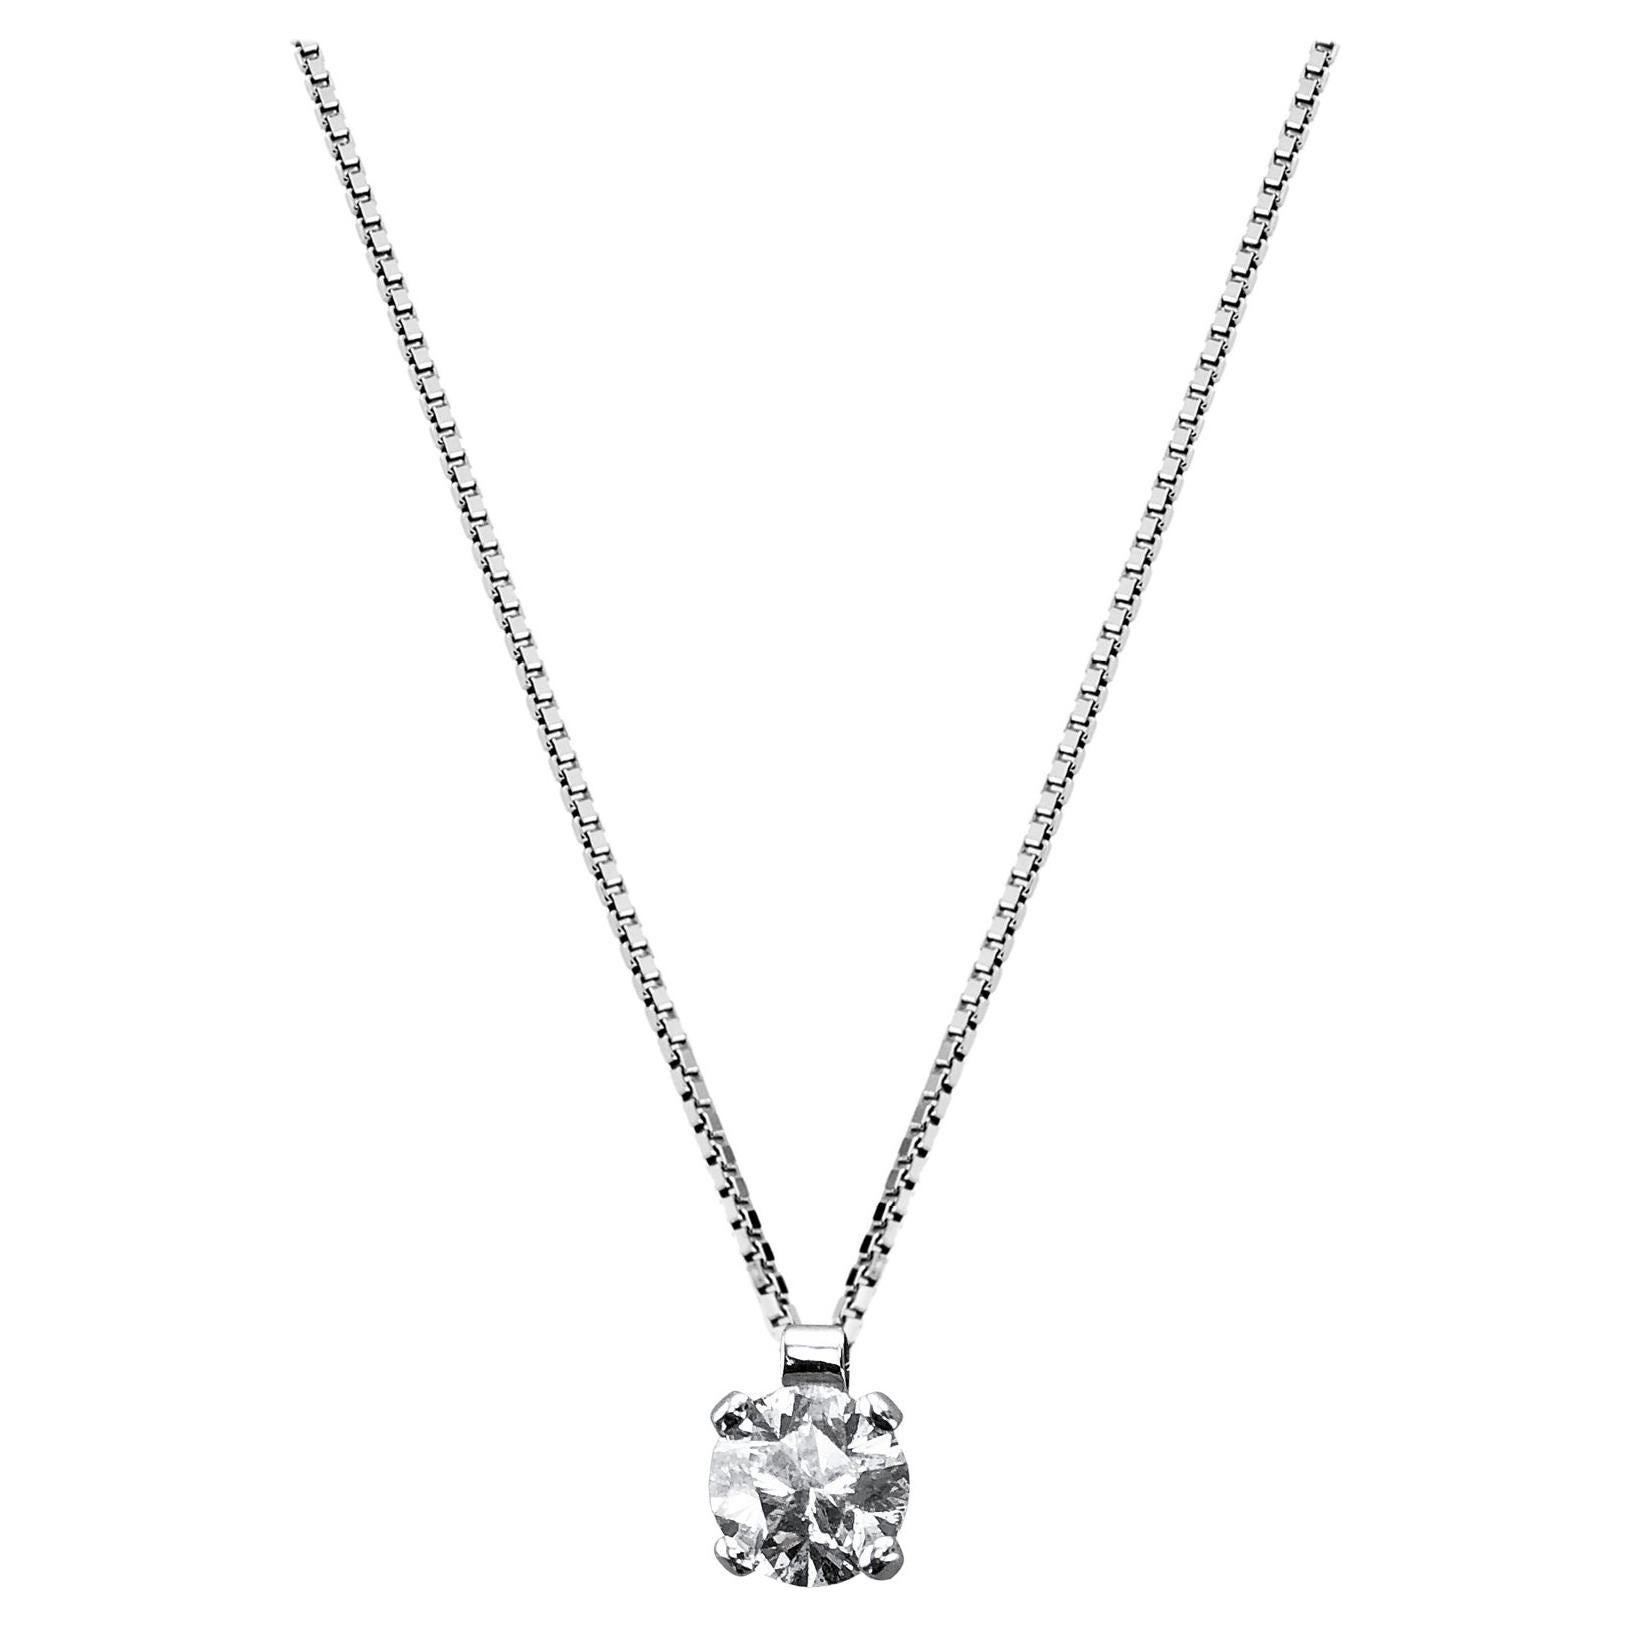 IGI Certified 0.89 Carat Round Diamond set in 18Kt White Gold Pendant Necklace